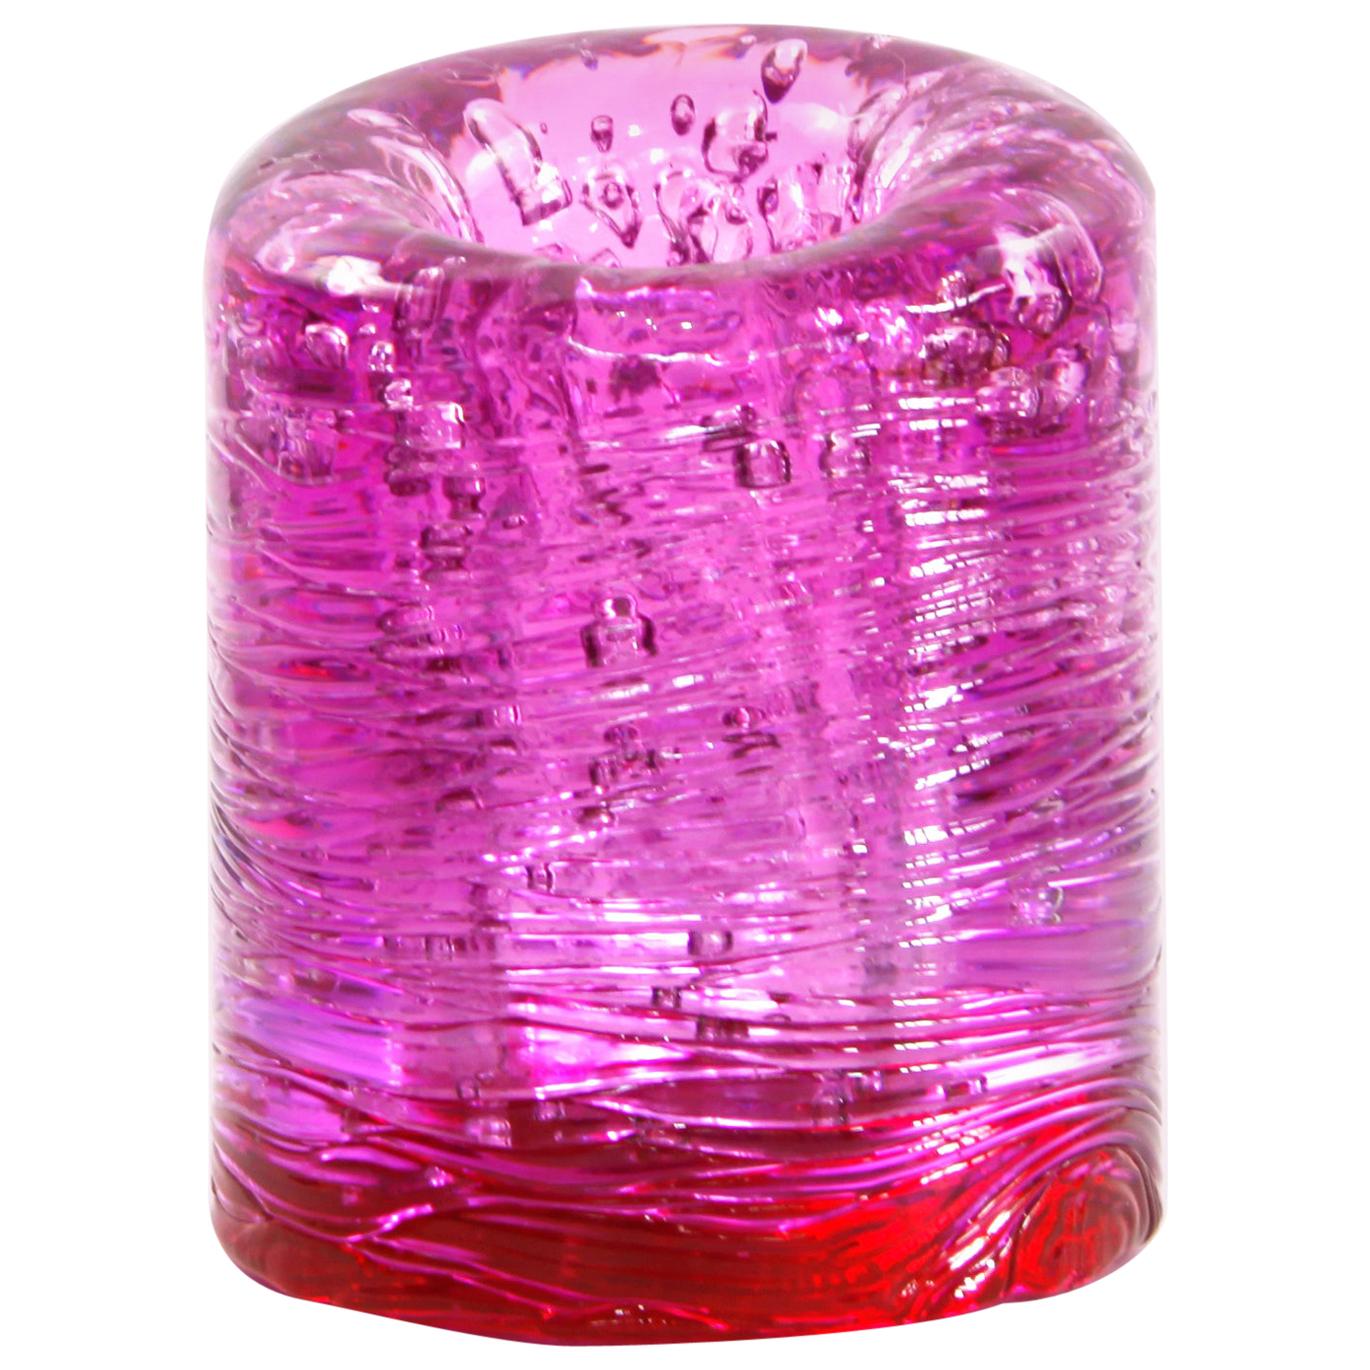 Jungle Contemporary Vase, Small Bicolor Pink and Red by Jacopo Foggini